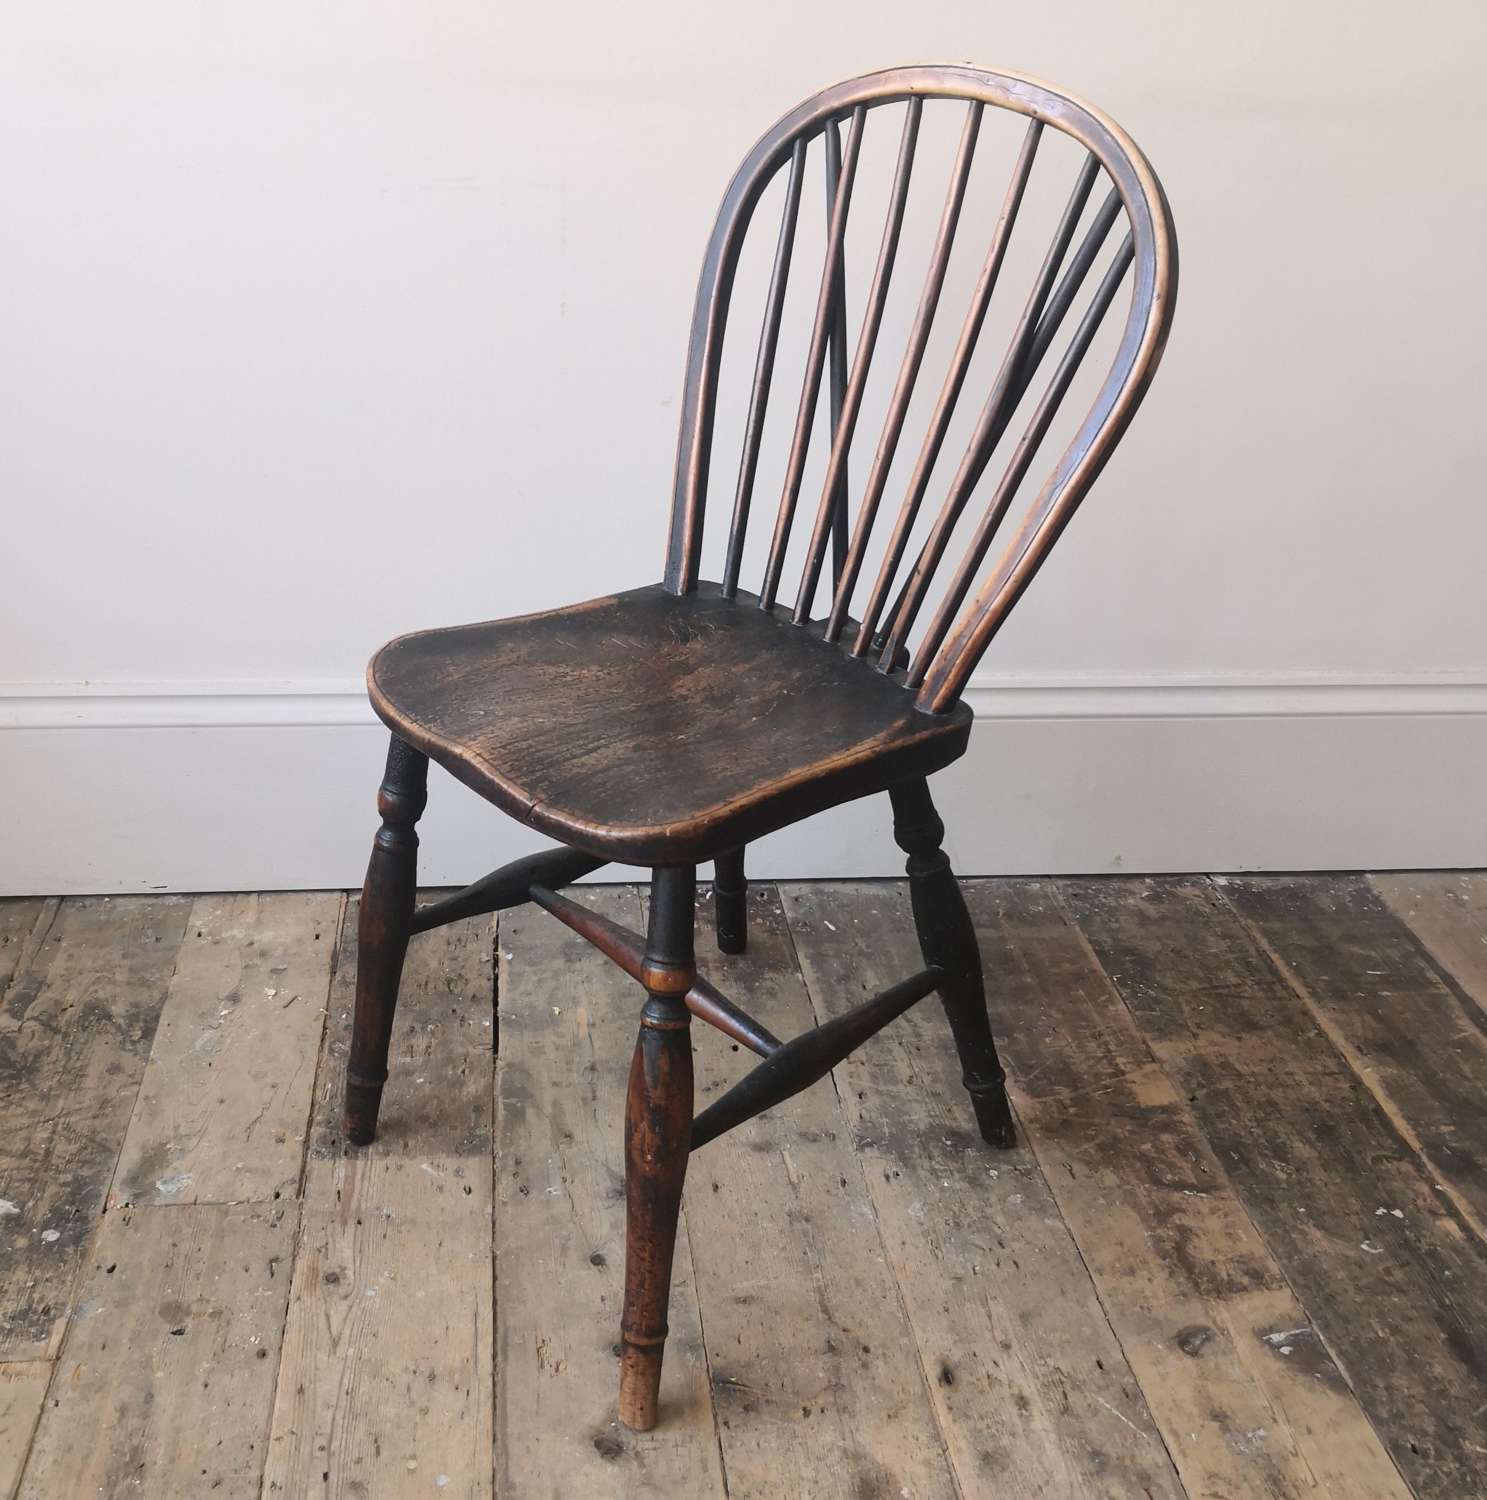 19th century Yew wood windsor chair